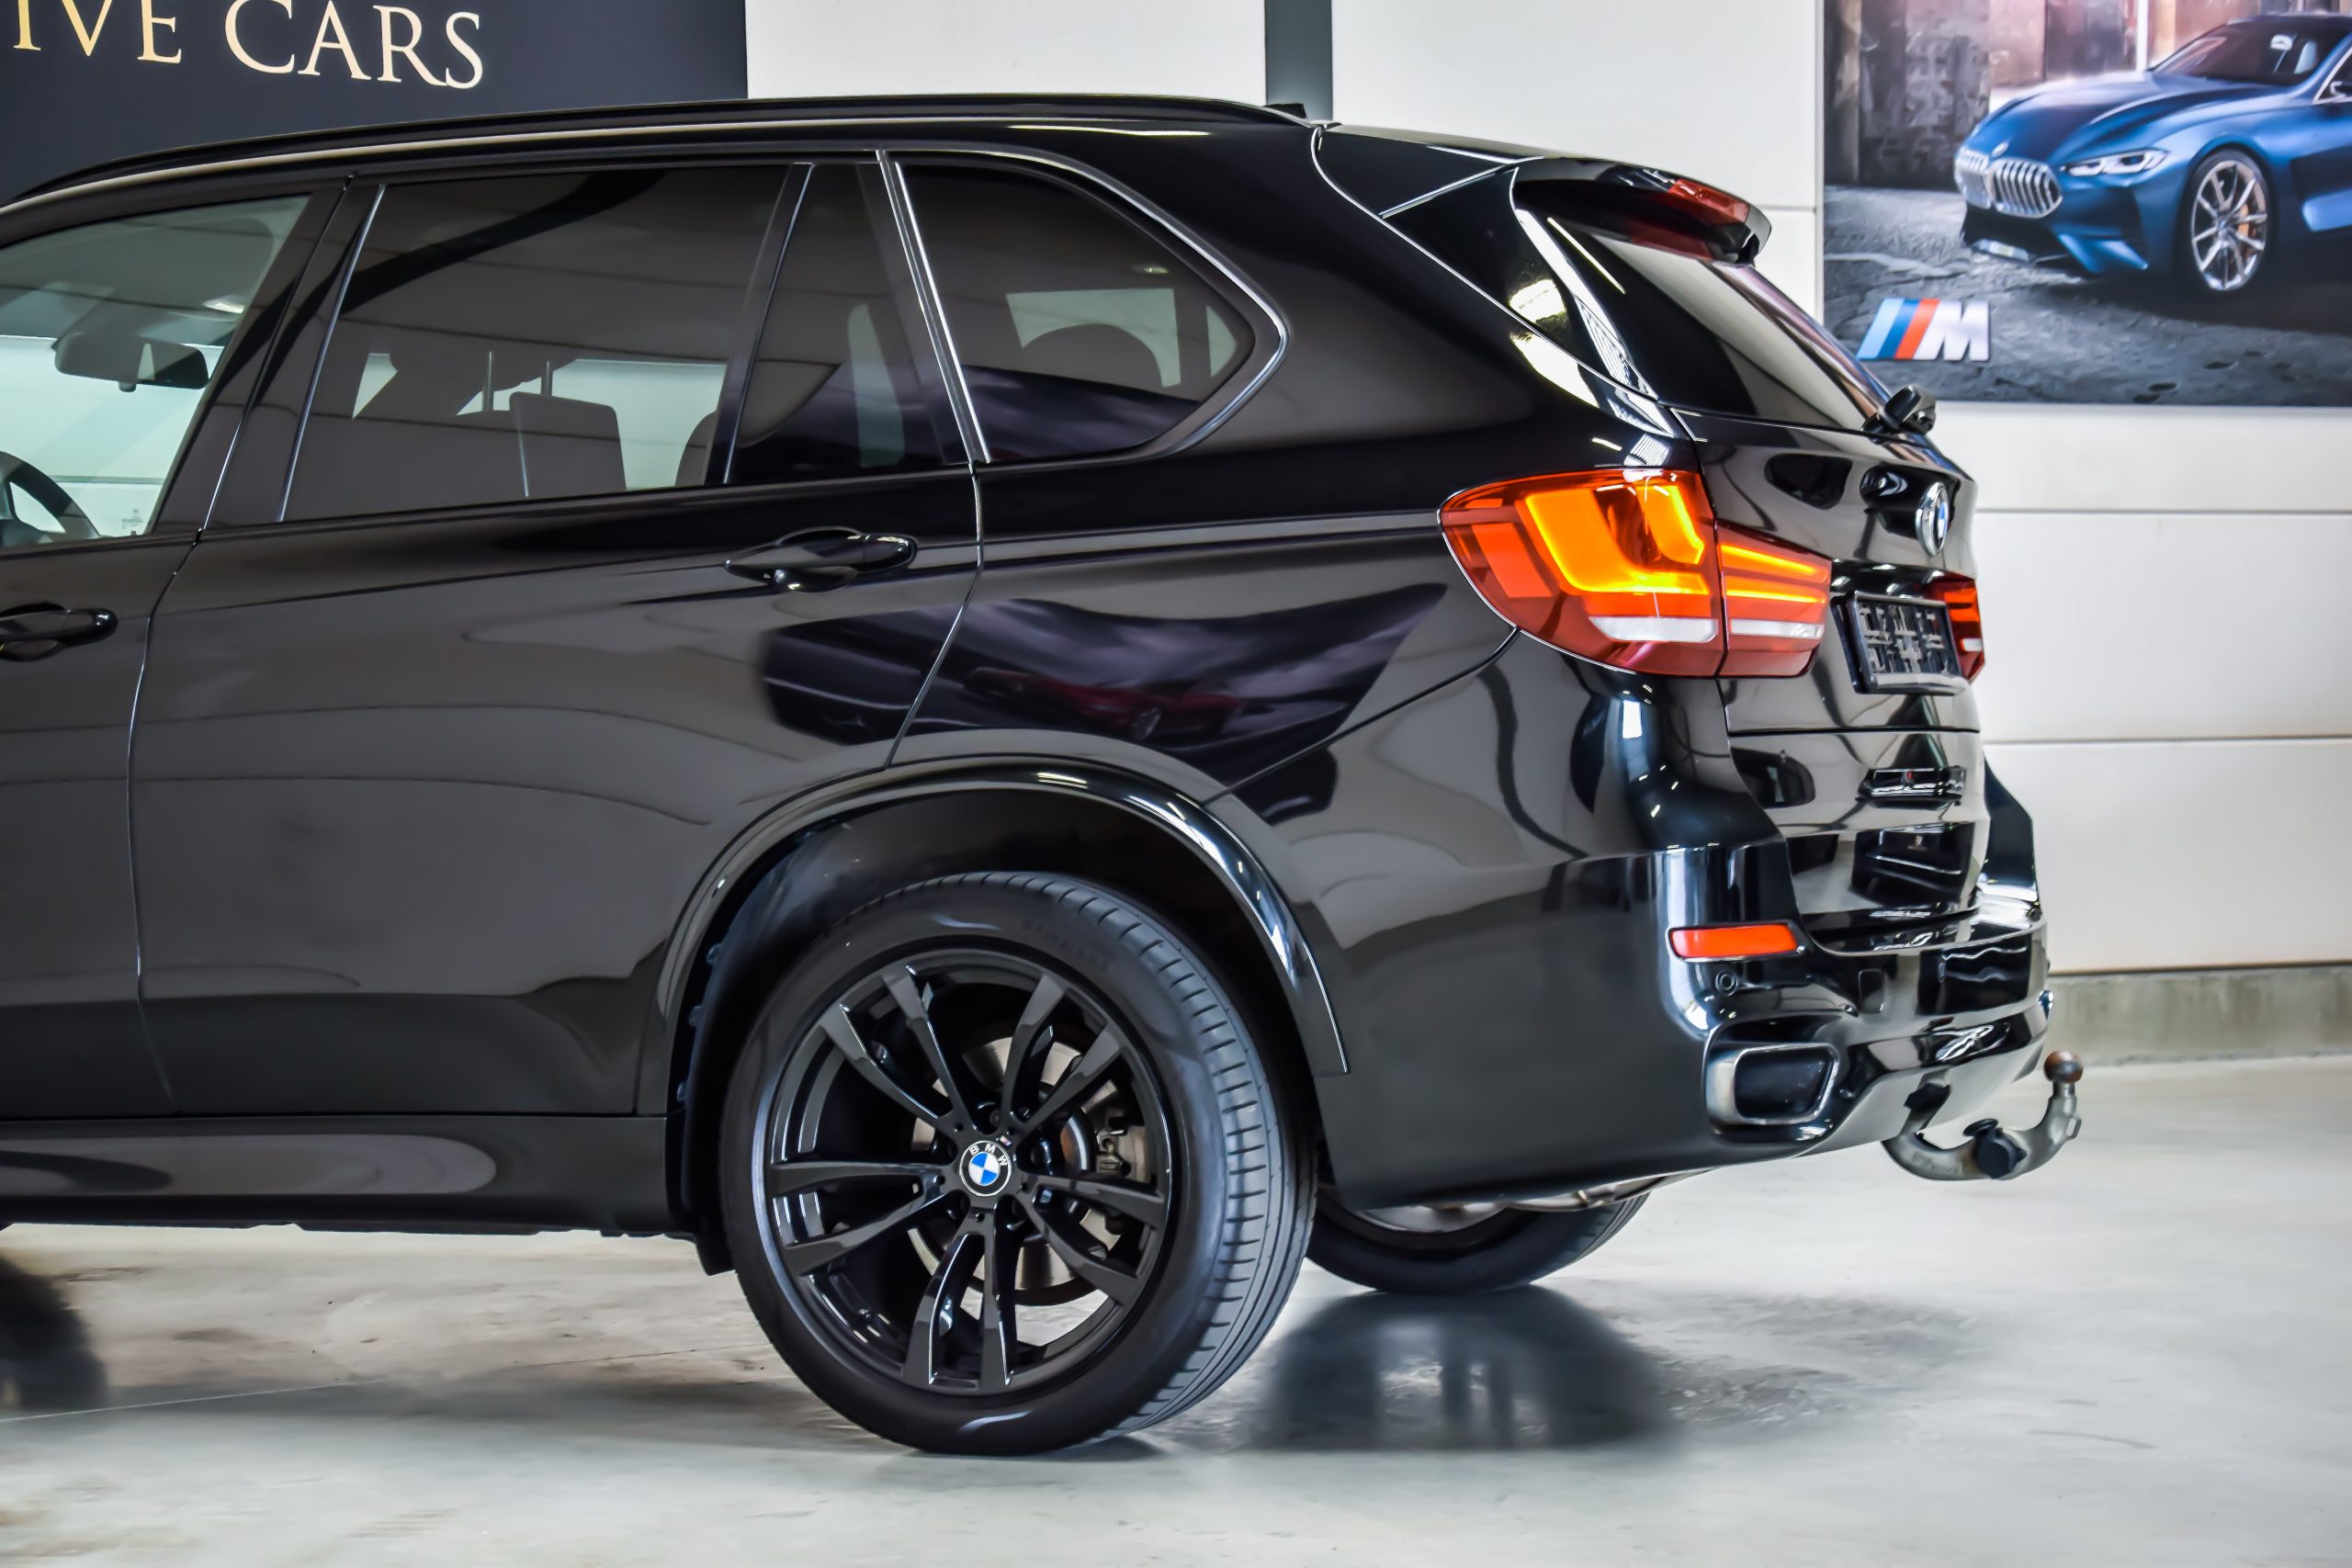 BMW X5 2.0AS xDrive40e Hybrid M-Sport Black Edition 01/2016